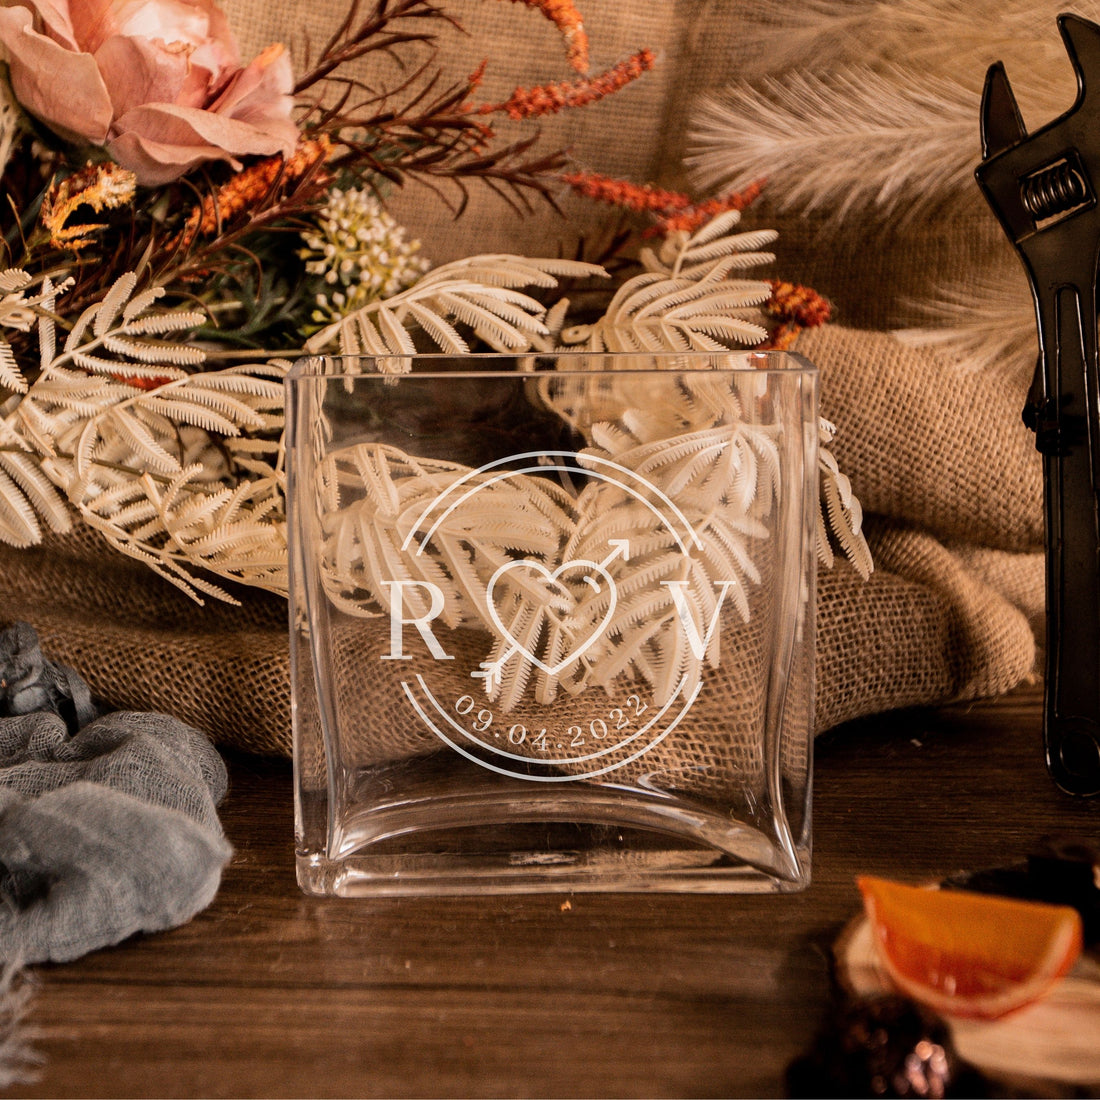 Personalised Medium Rectangle Clear Glass Vase, Custom Engraved Memorial Wedding Gift for Bridesmaid, Mother of Bride/ Groom, Housewarming, Anniversary